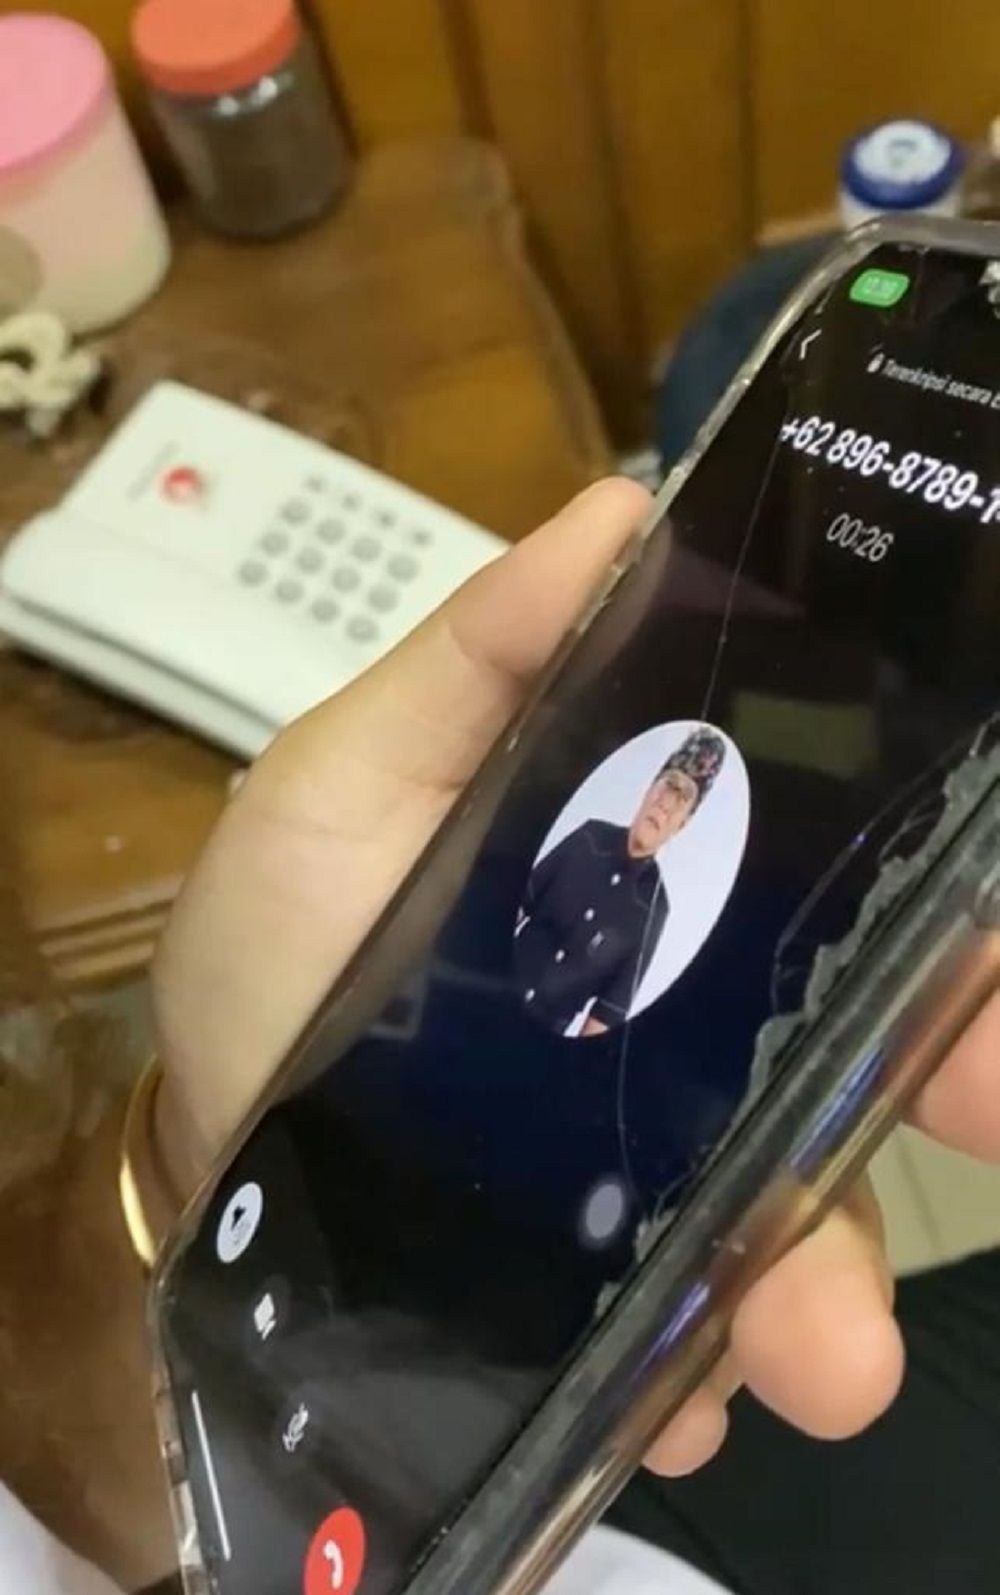 Panggilan telepon dengan gambar wajah Bupati Badung Giri Prasta